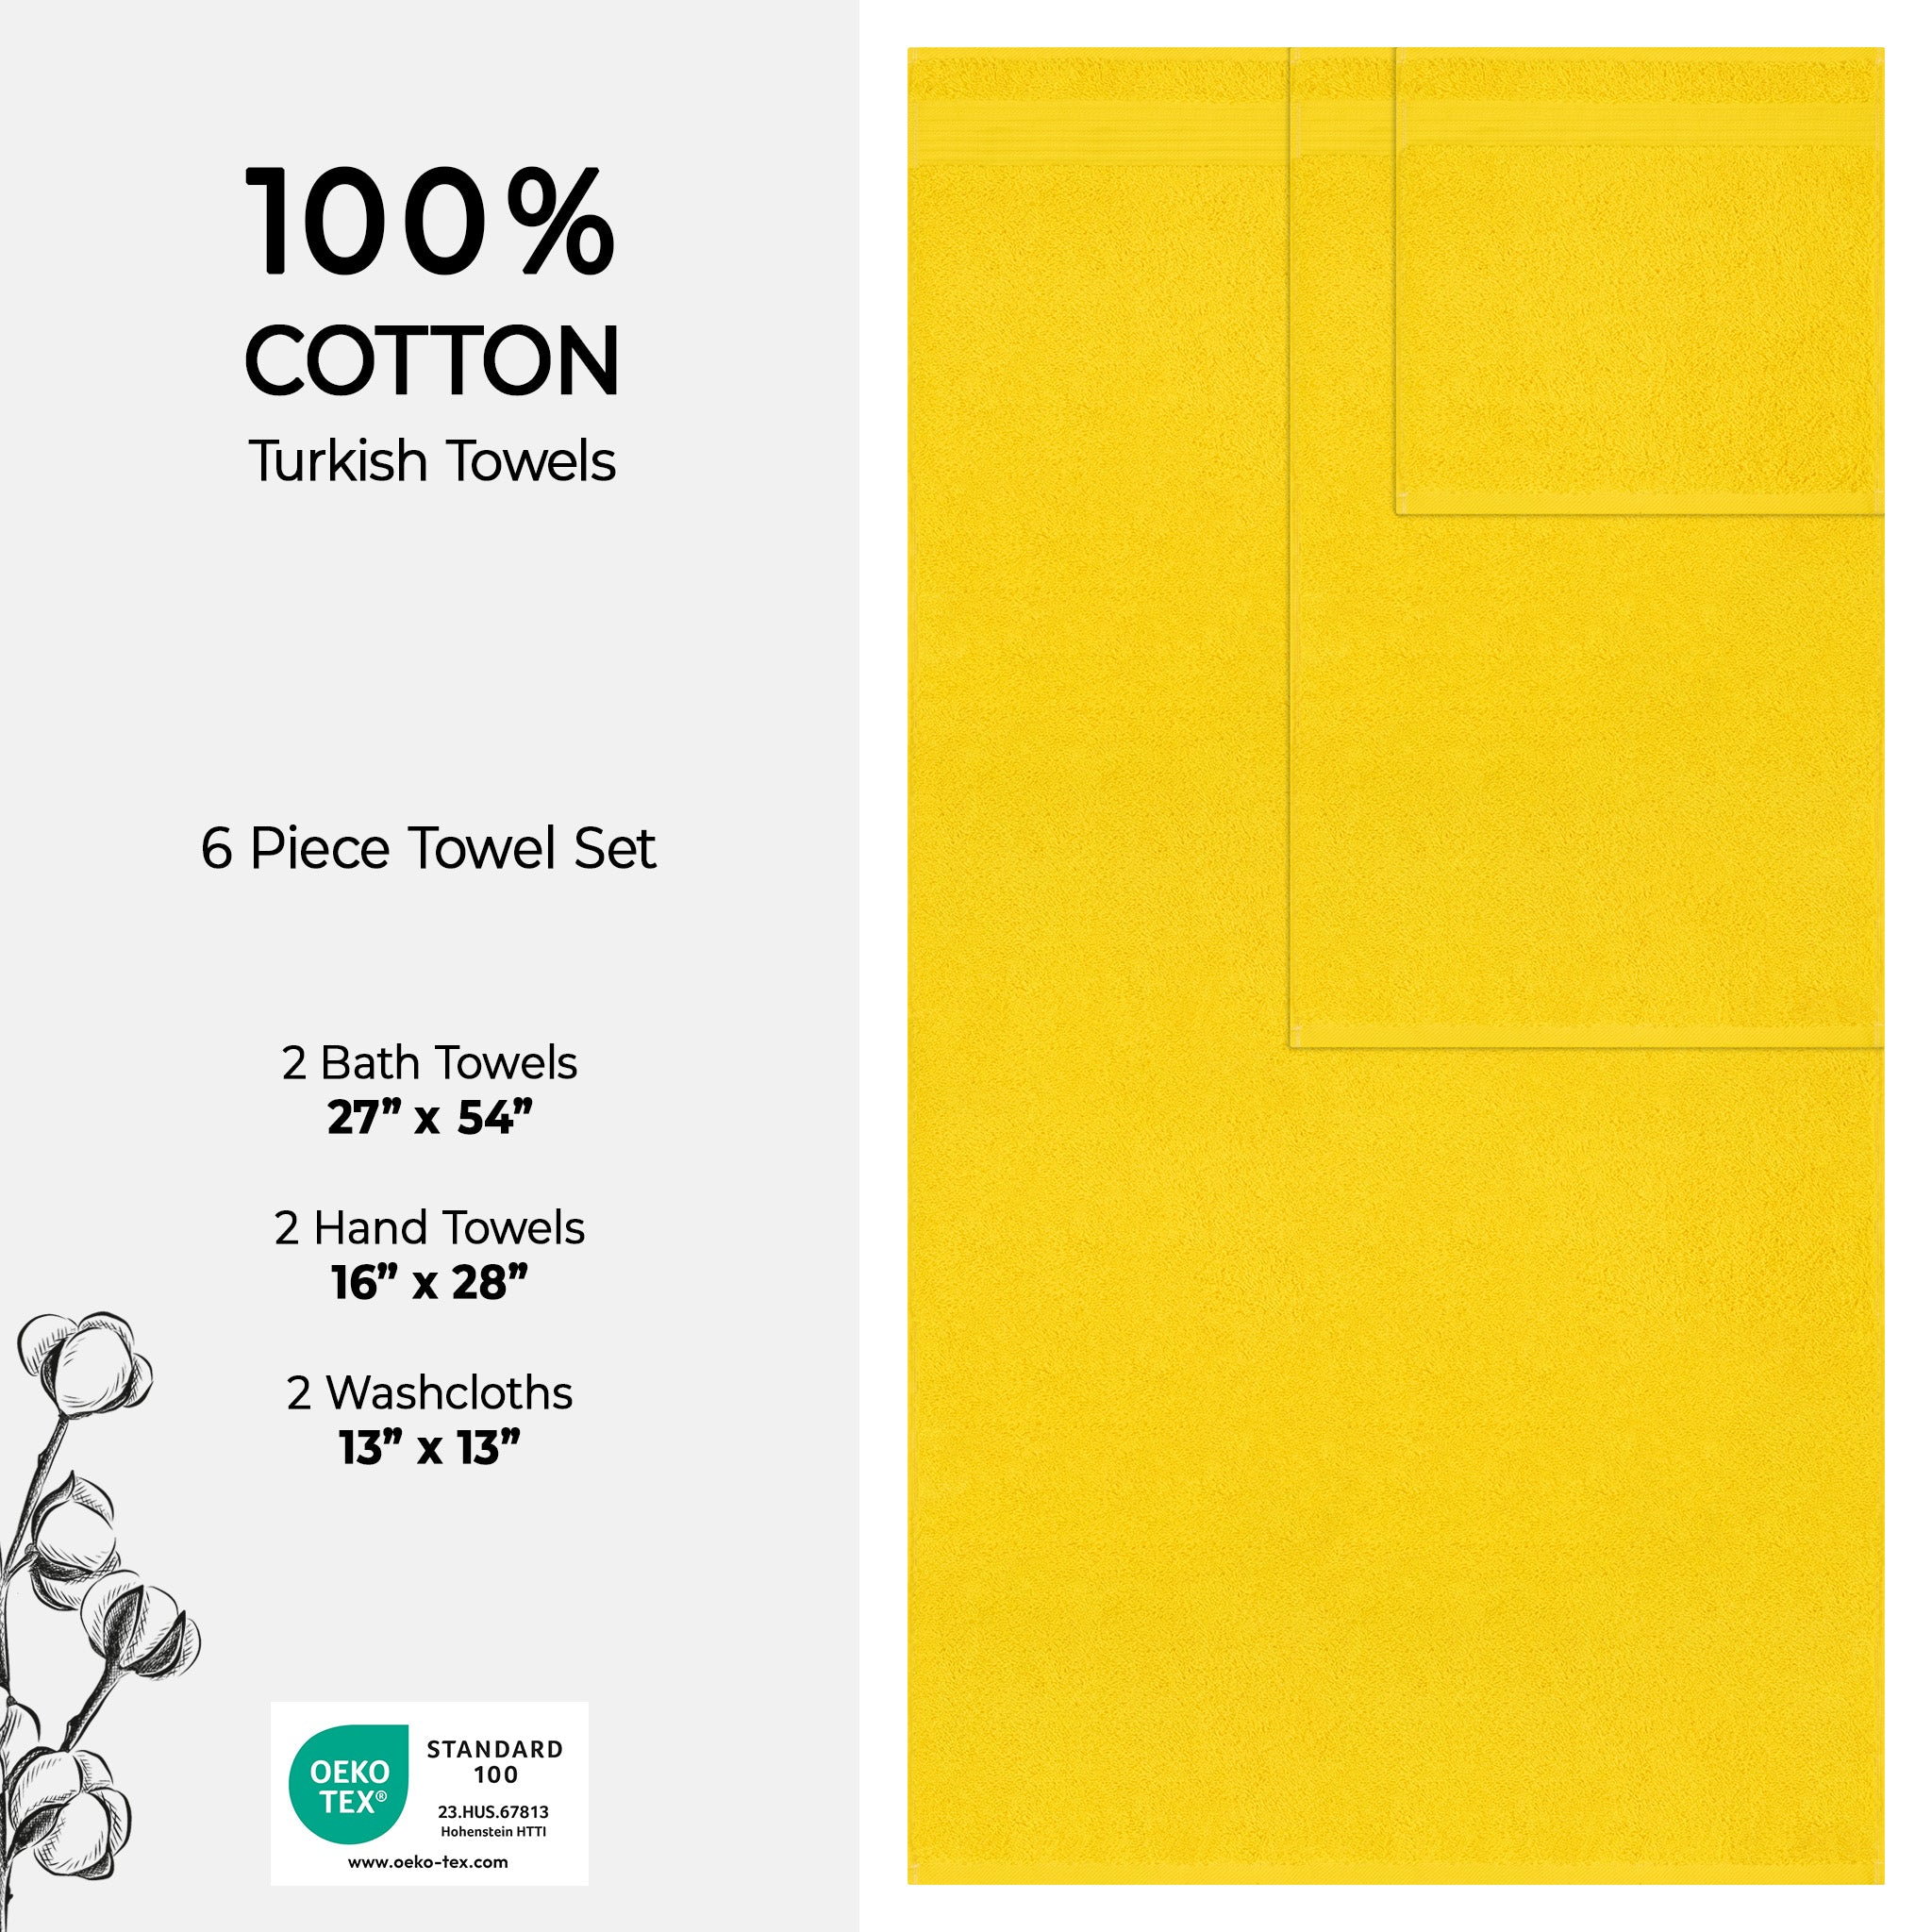 American Soft Linen Bekos 100% Cotton Turkish Towels 6 Piece Bath Towel Set -yellow-04